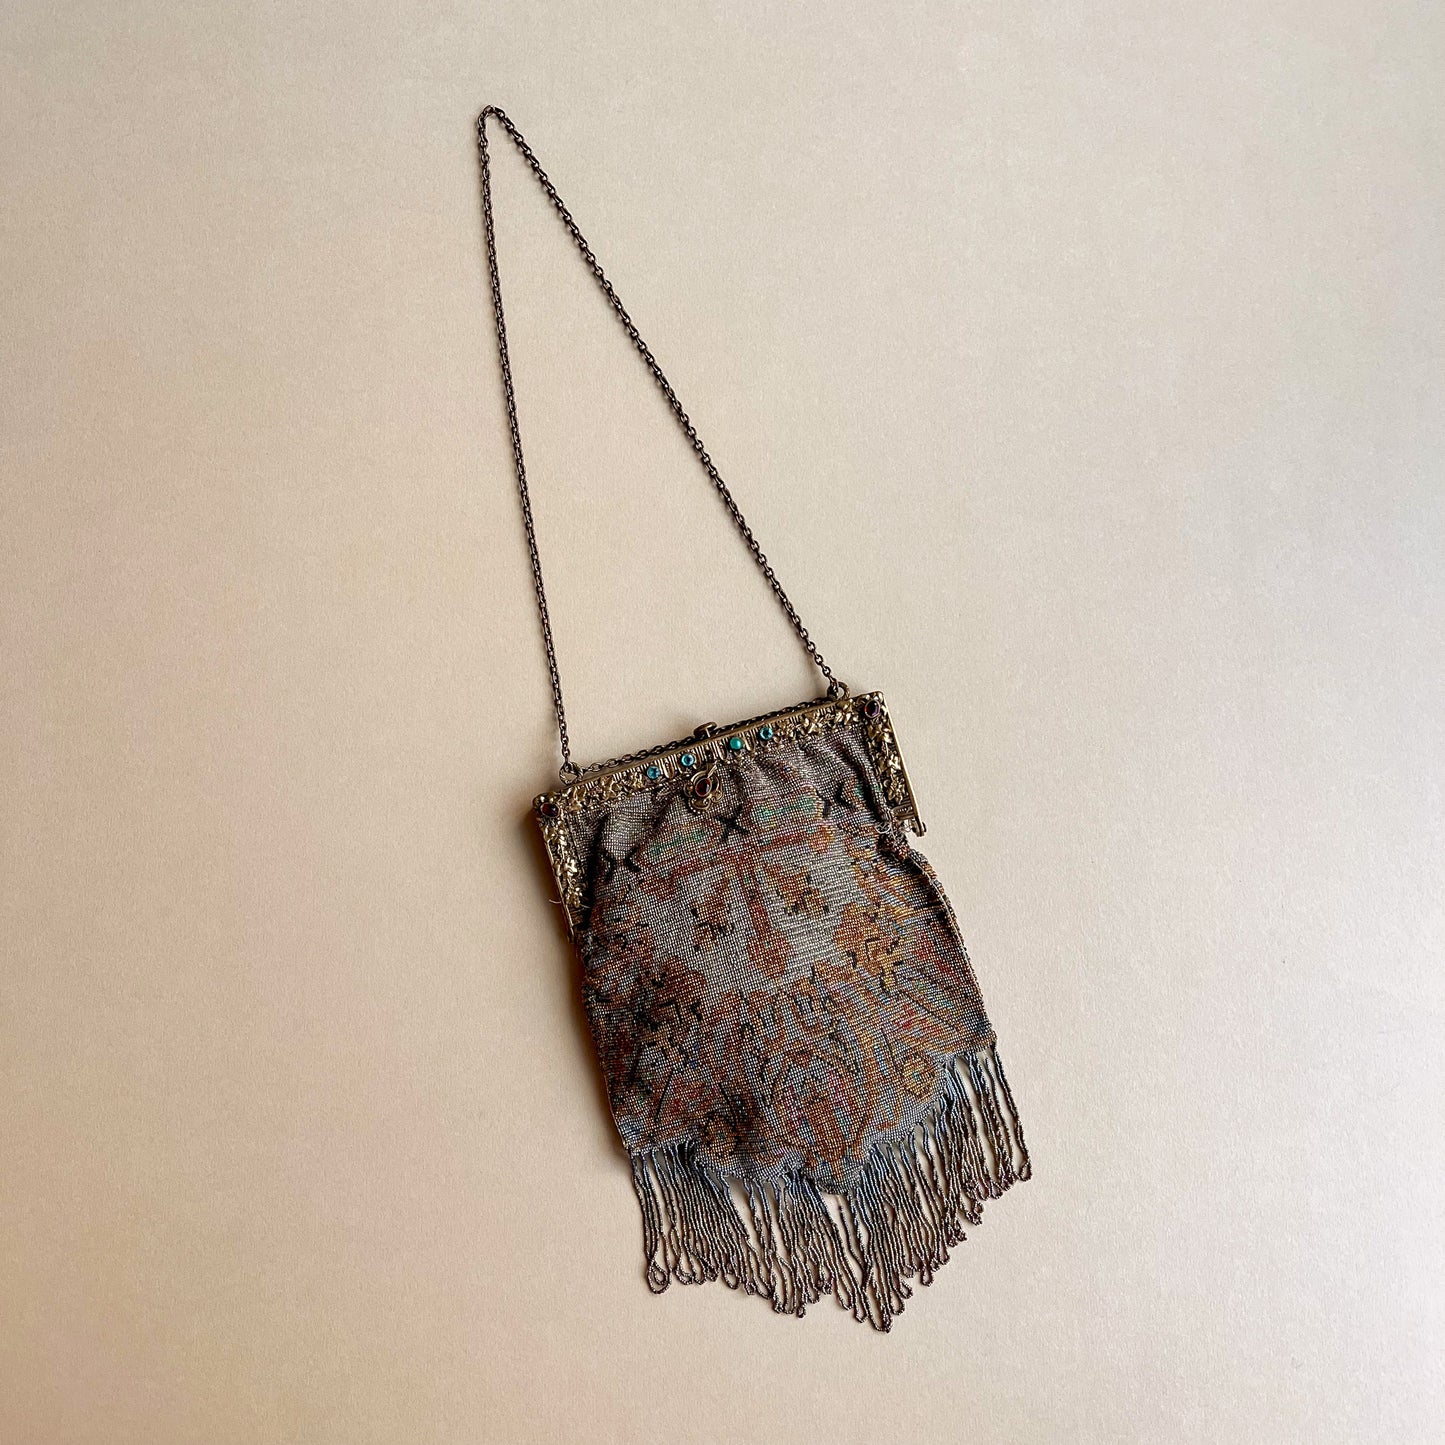 1920s French Micro-Bead Fringe Gold Handbag